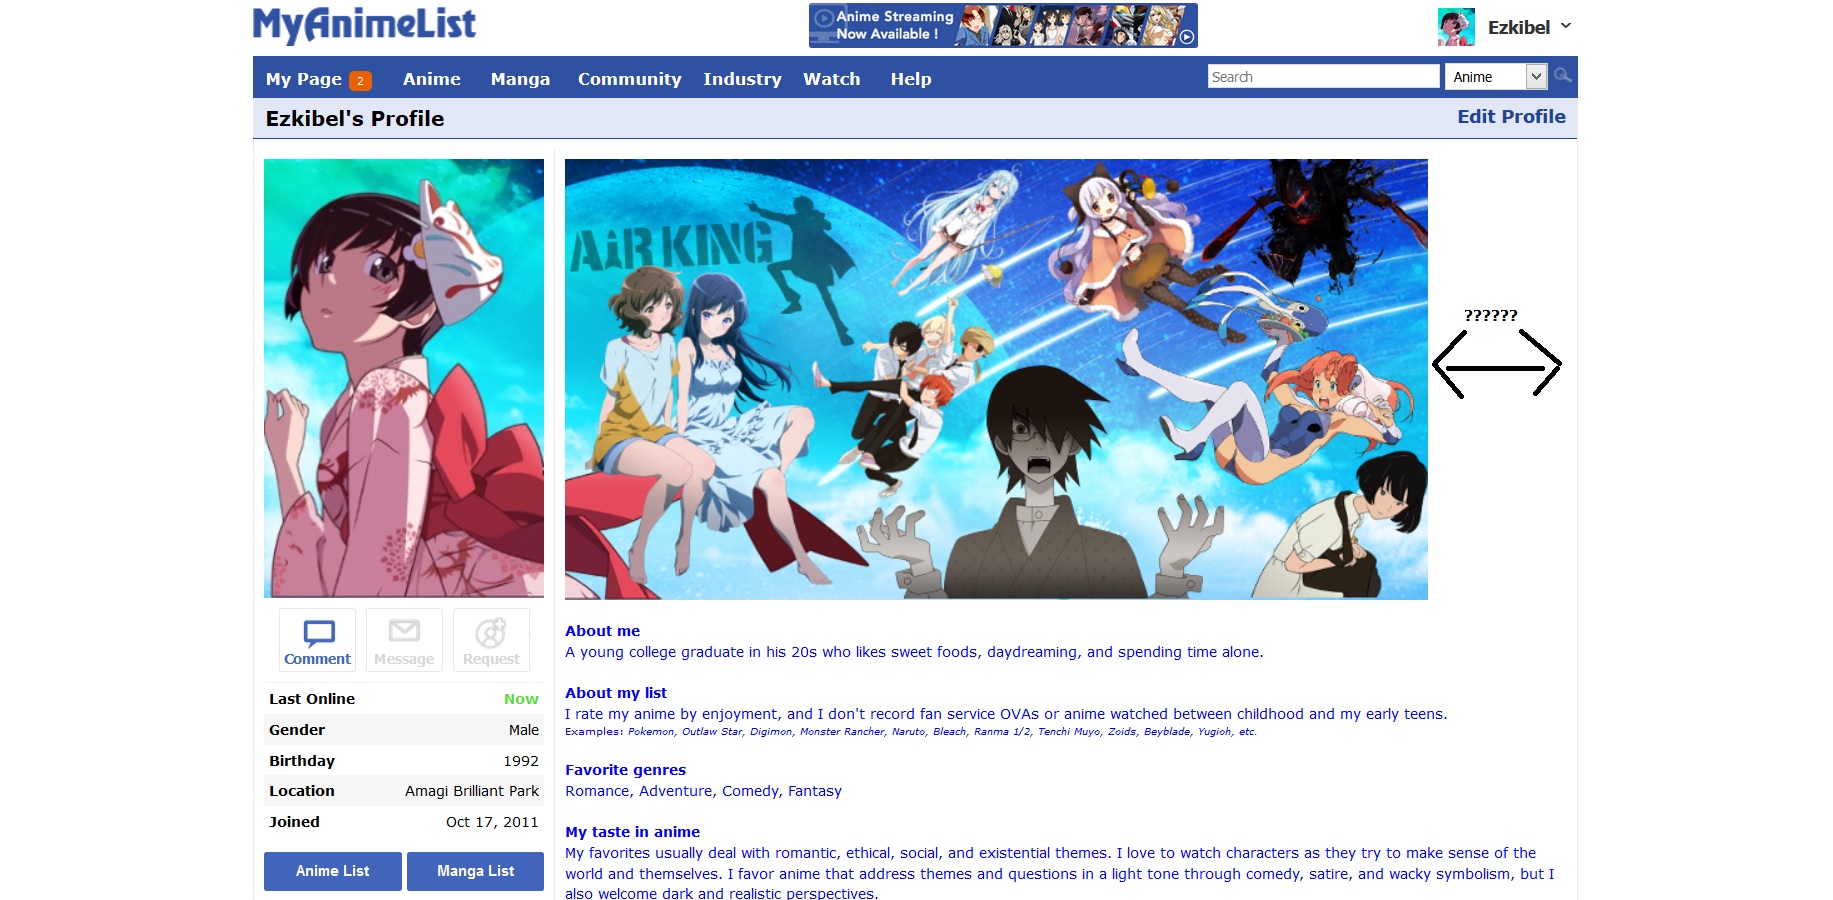 My Anime List - Anime Streaming website